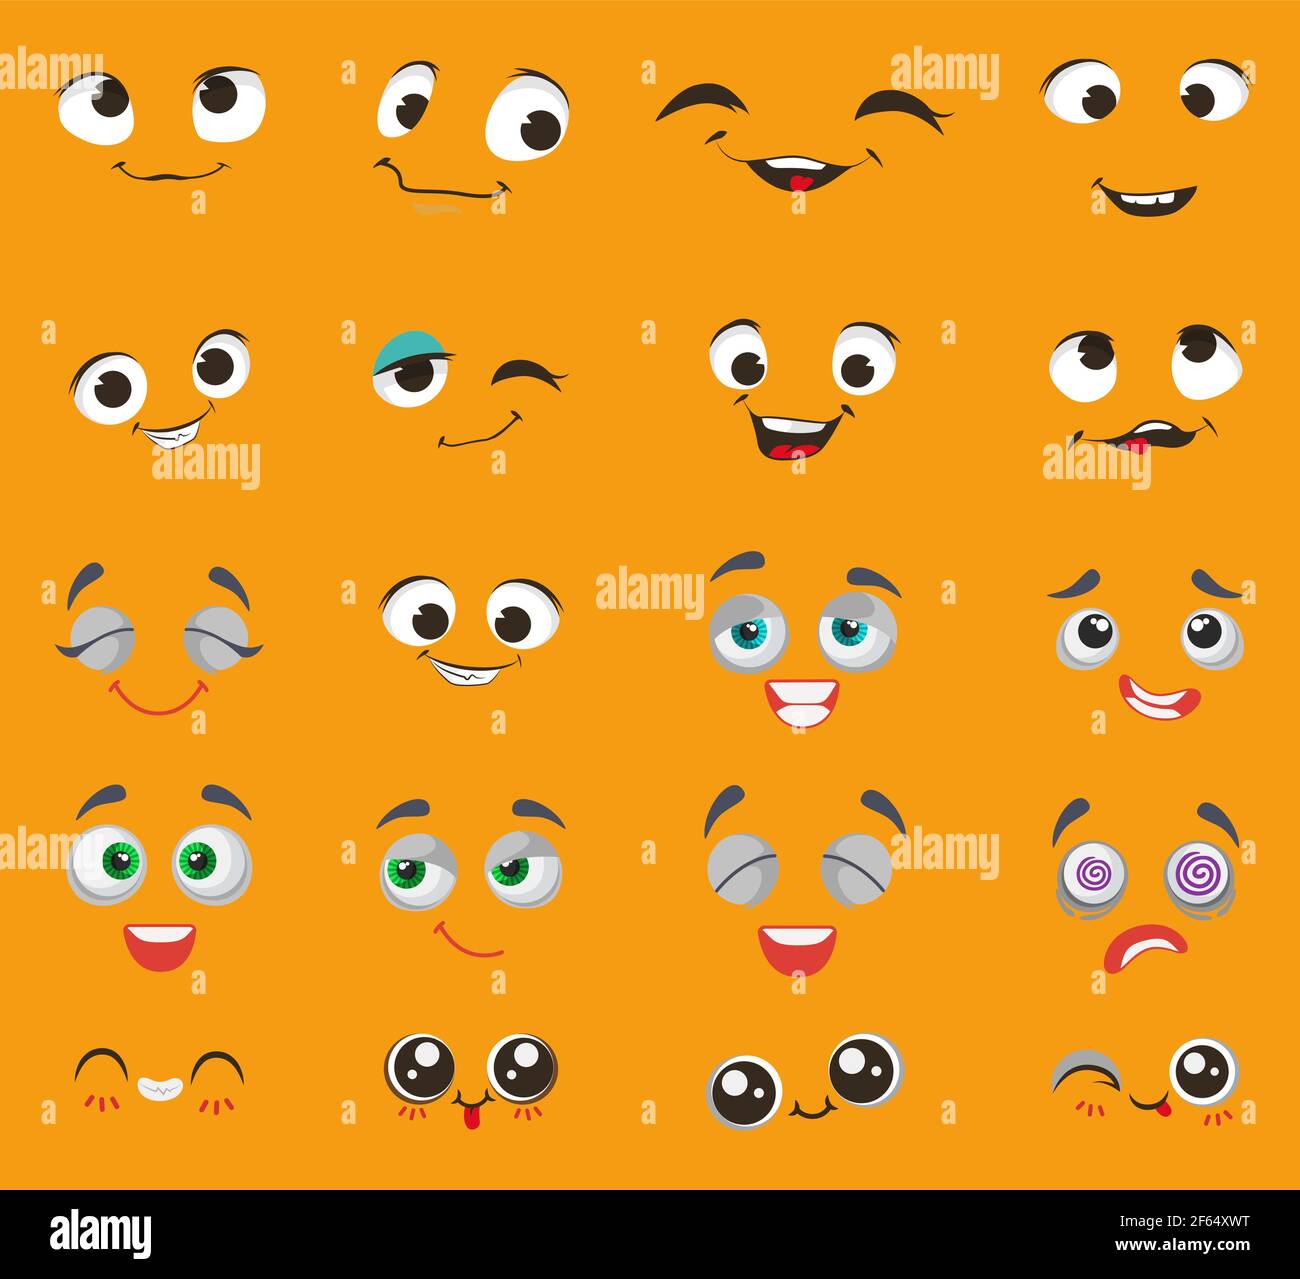 Emoji cute cartoon character set, vector illustration. Comic emoticon with sad, happy, crazy face expressions. Stock Vector